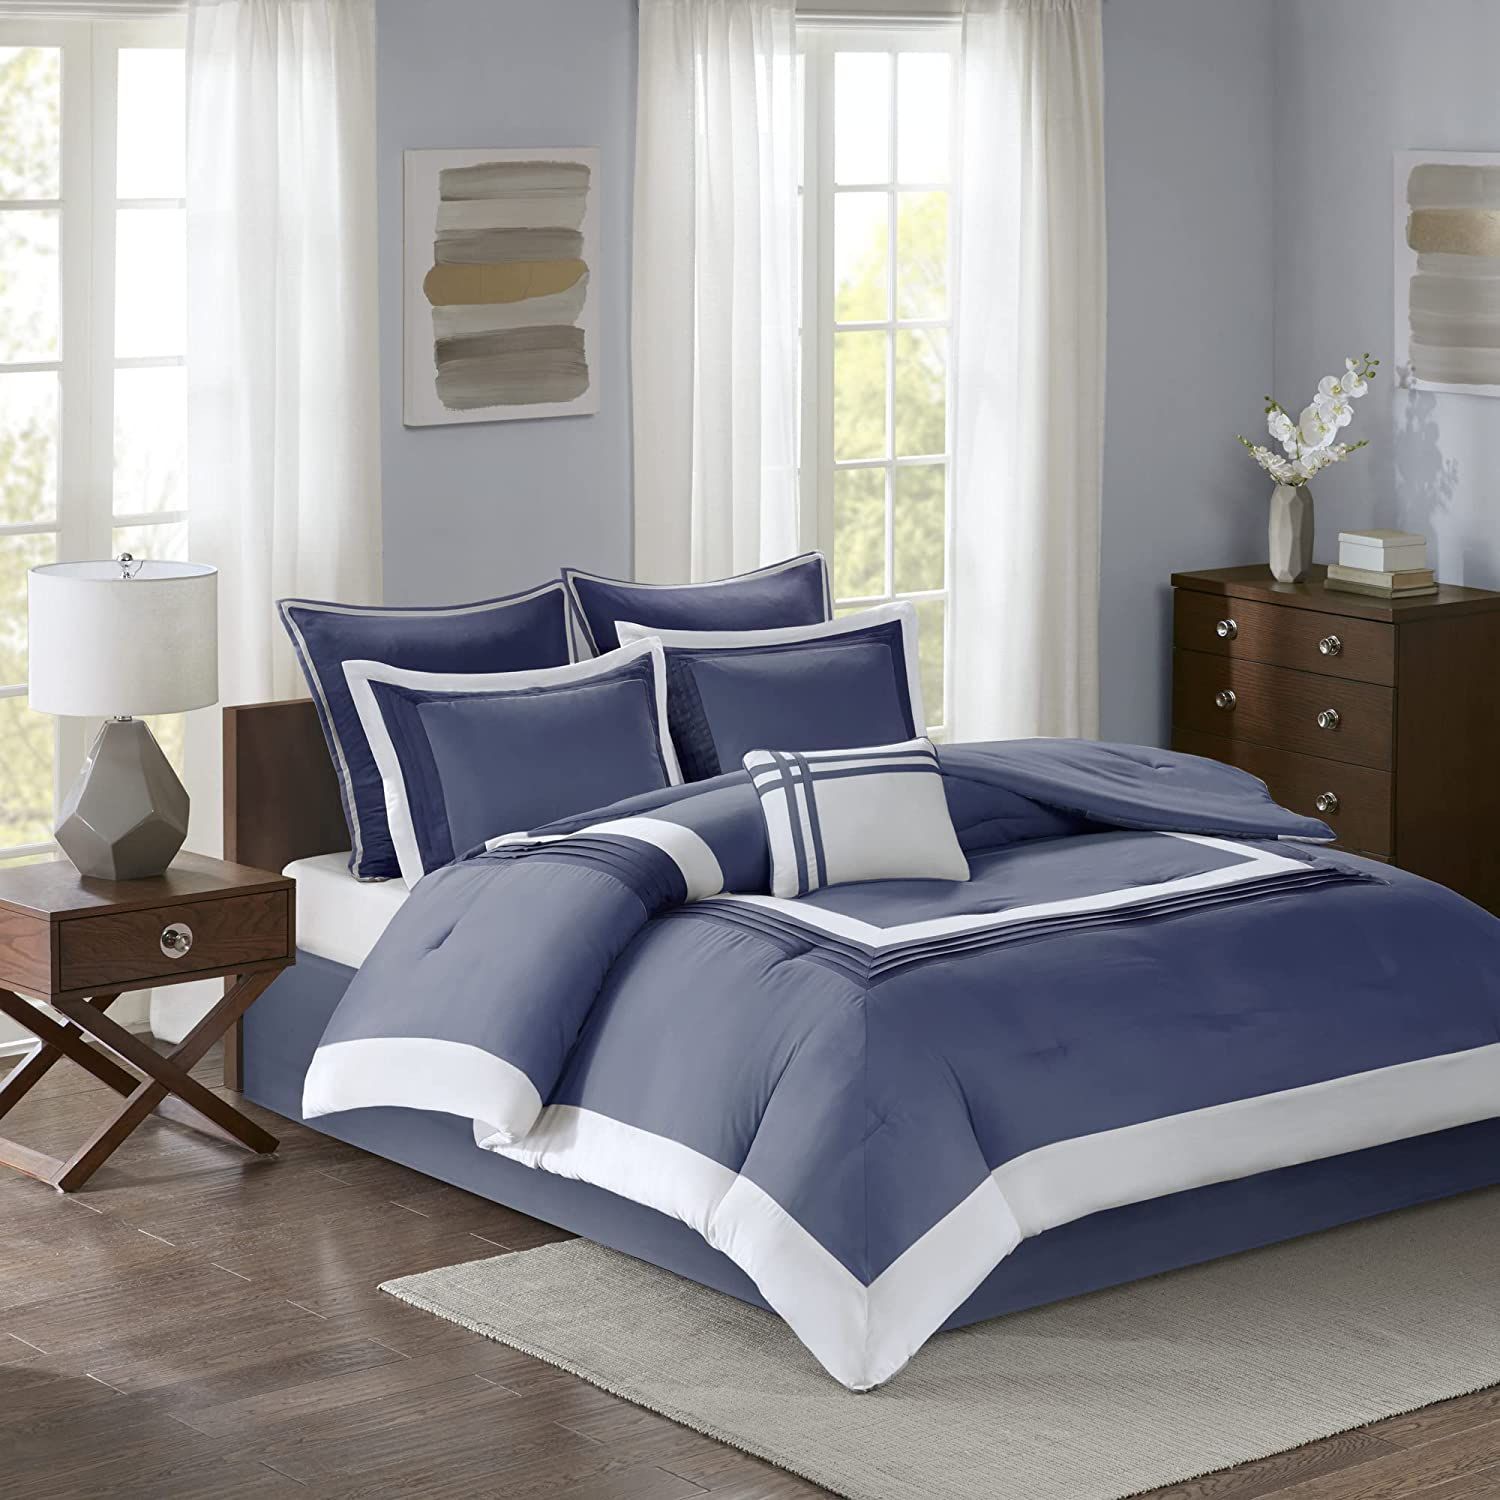 Elegant Comfort All Season Comforter and Year Round Medium Weight Super Soft Dow 